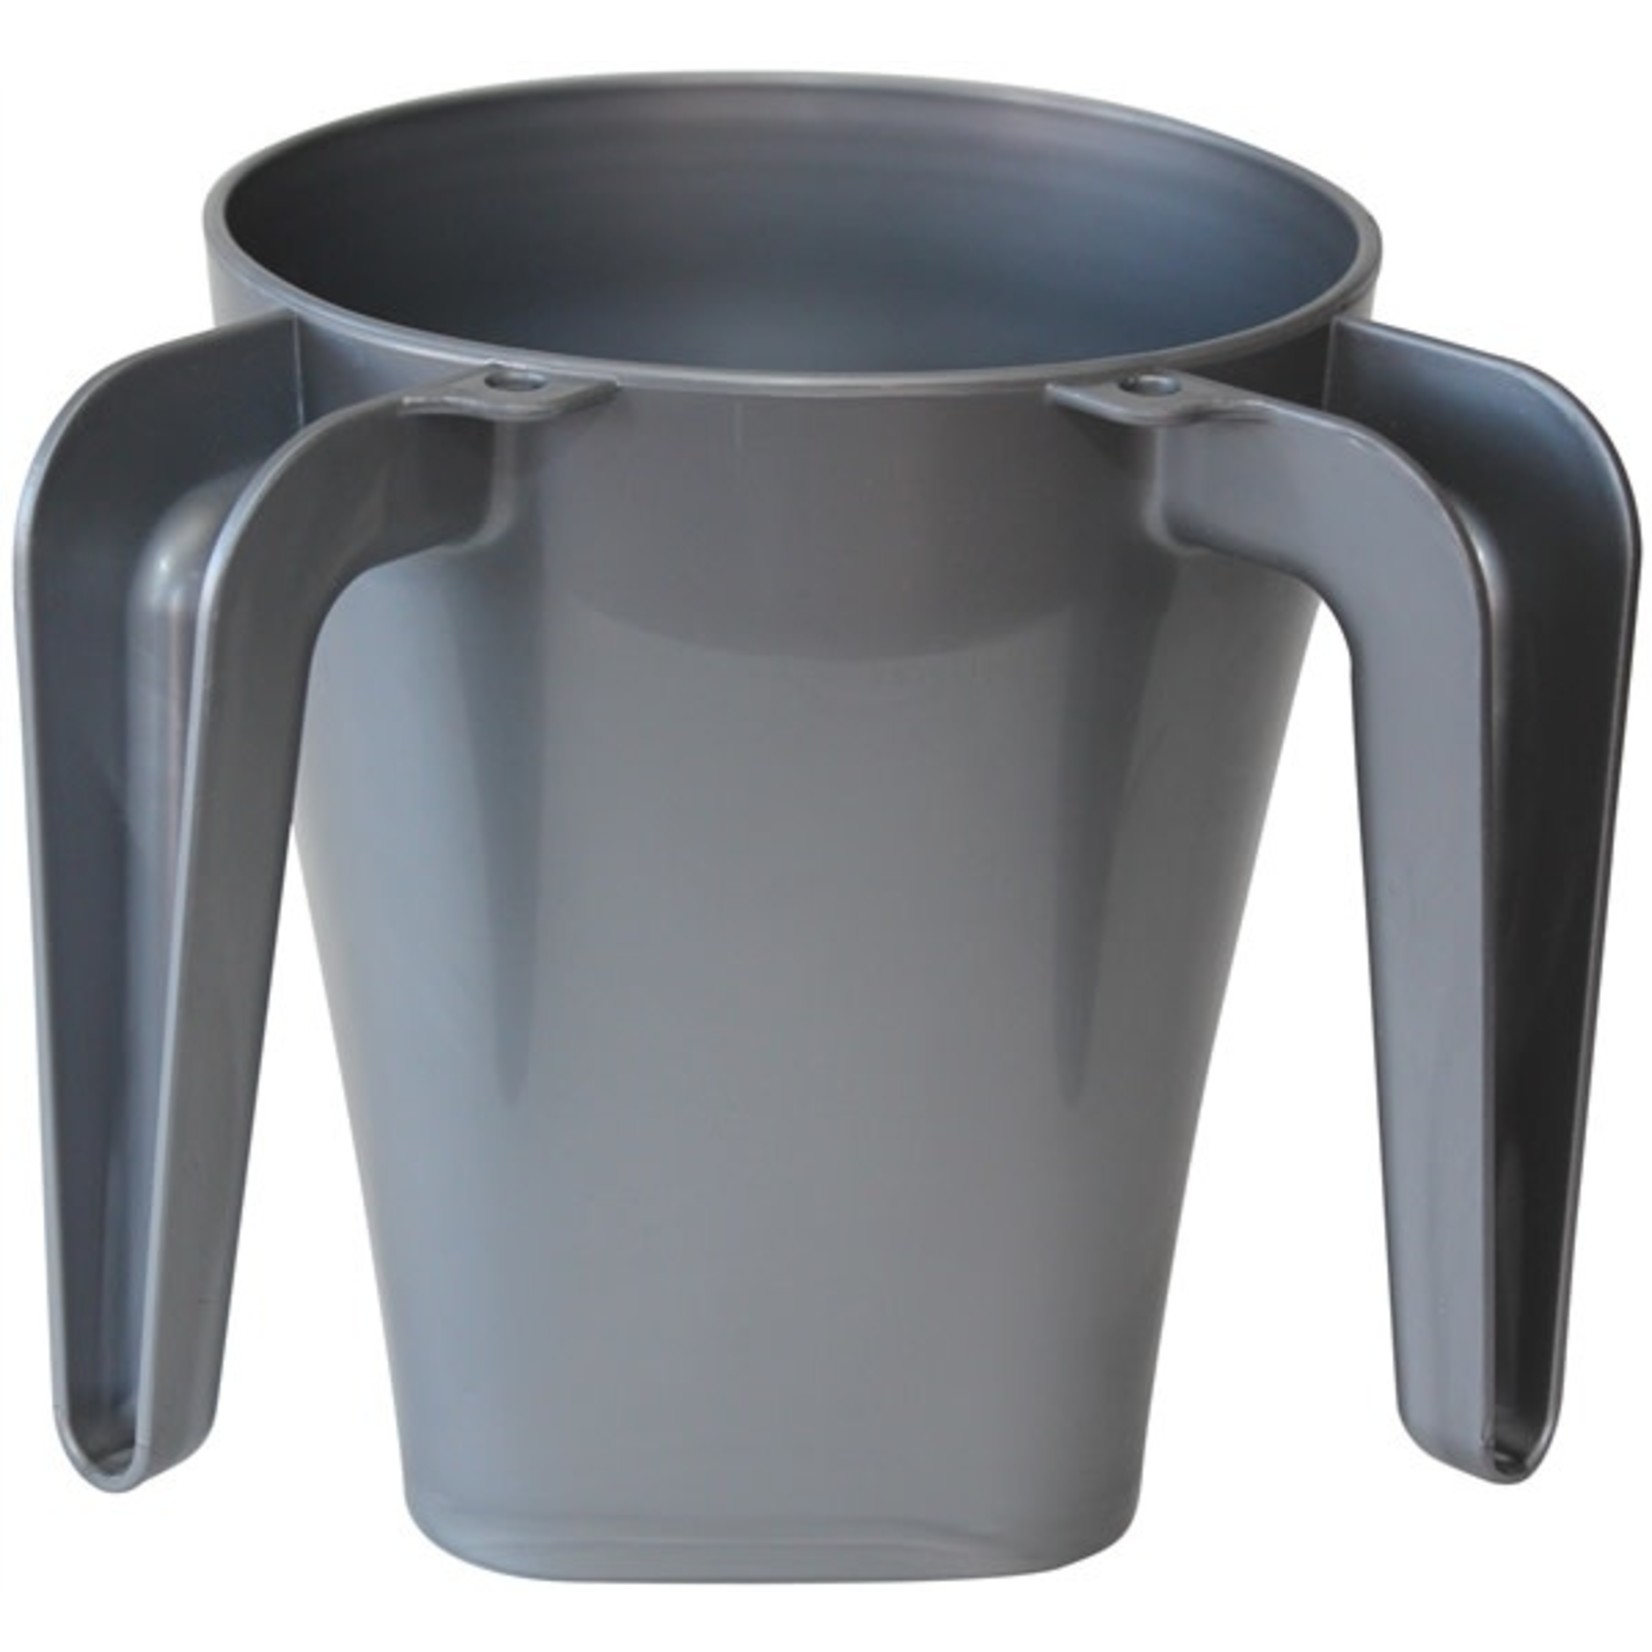 Plastic Washing Cup, Grey